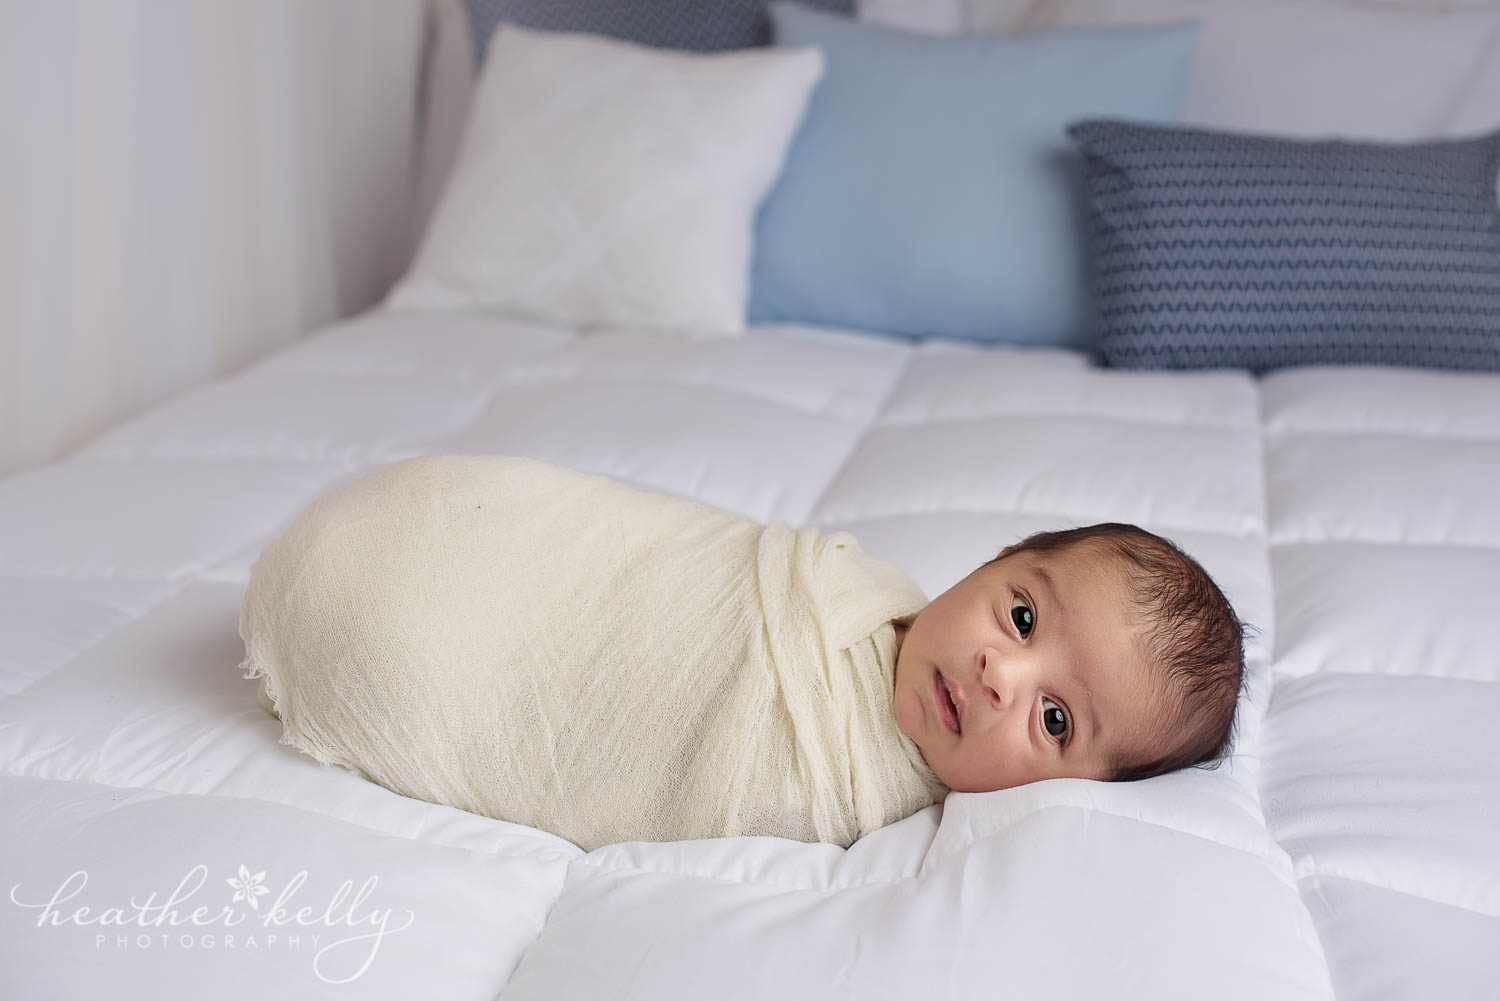 awake newborn wrapped on bed. newborn wrapping poses